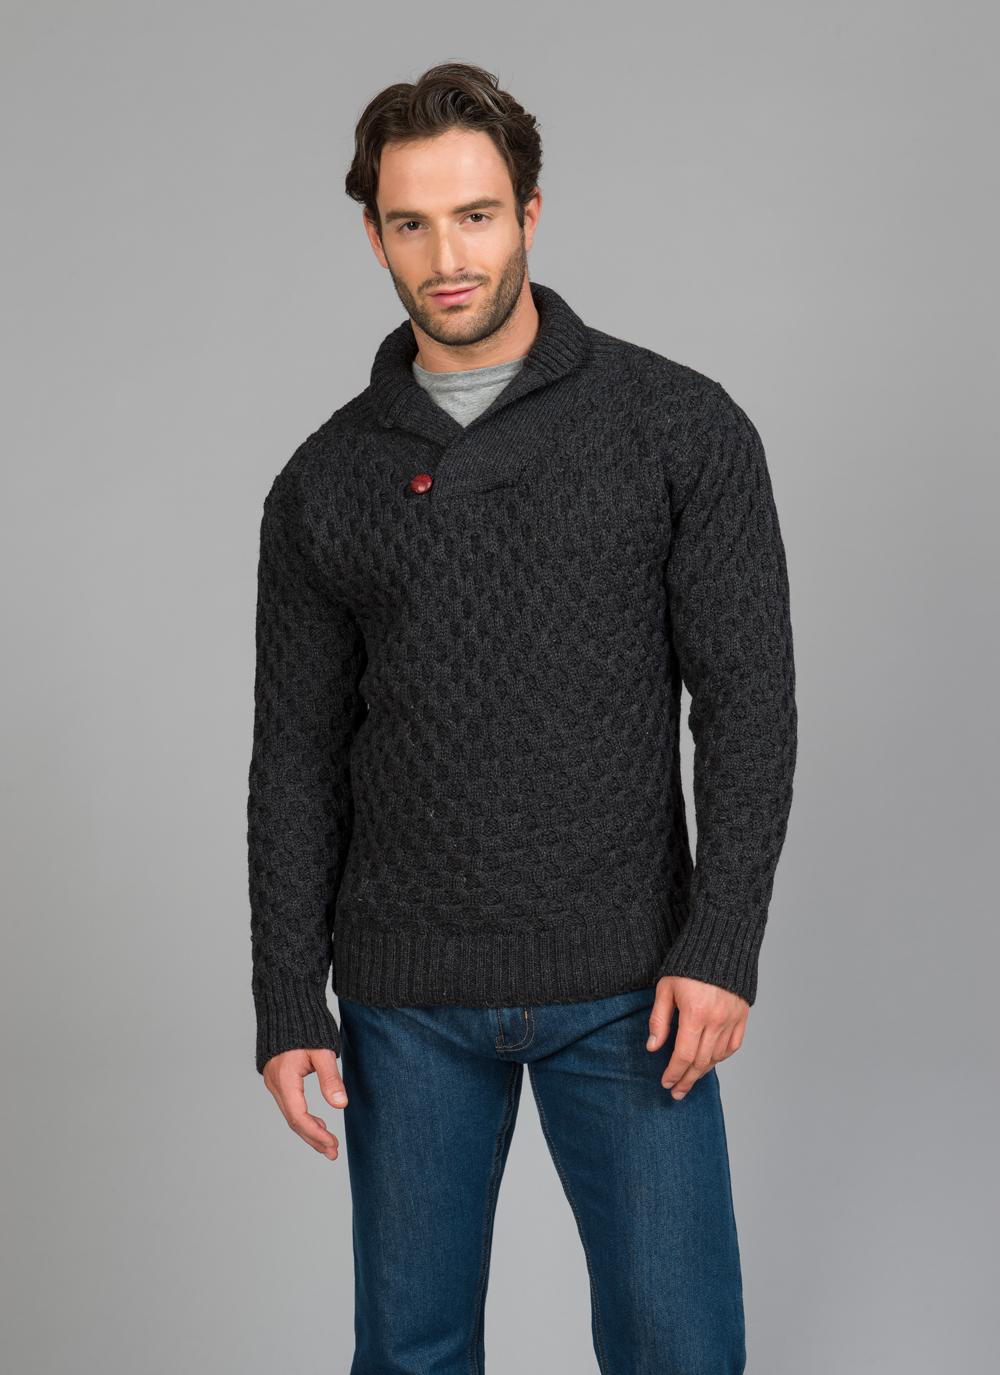 Aran Private Label Irish Mens Merino Wool Shawl Collar One Button Pullover Sweater Jumper Buttoned Neck